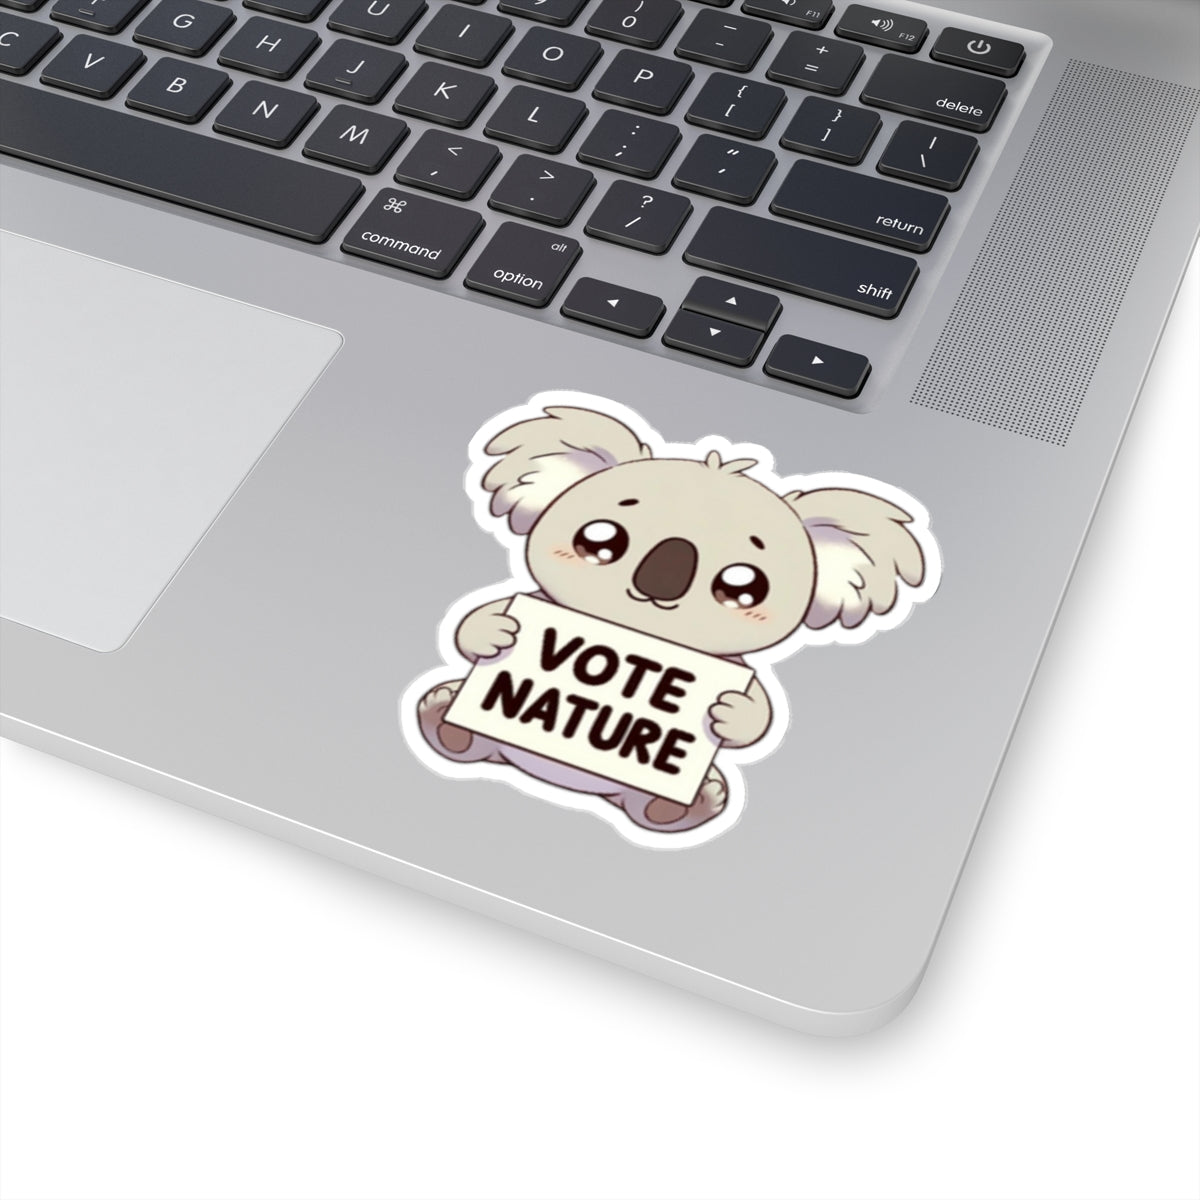 Inspirational Cute Kawala Statement vinyl Sticker: Vote Nature! for laptop, kindle, phone, ipad, instrument case, notebook, mood board